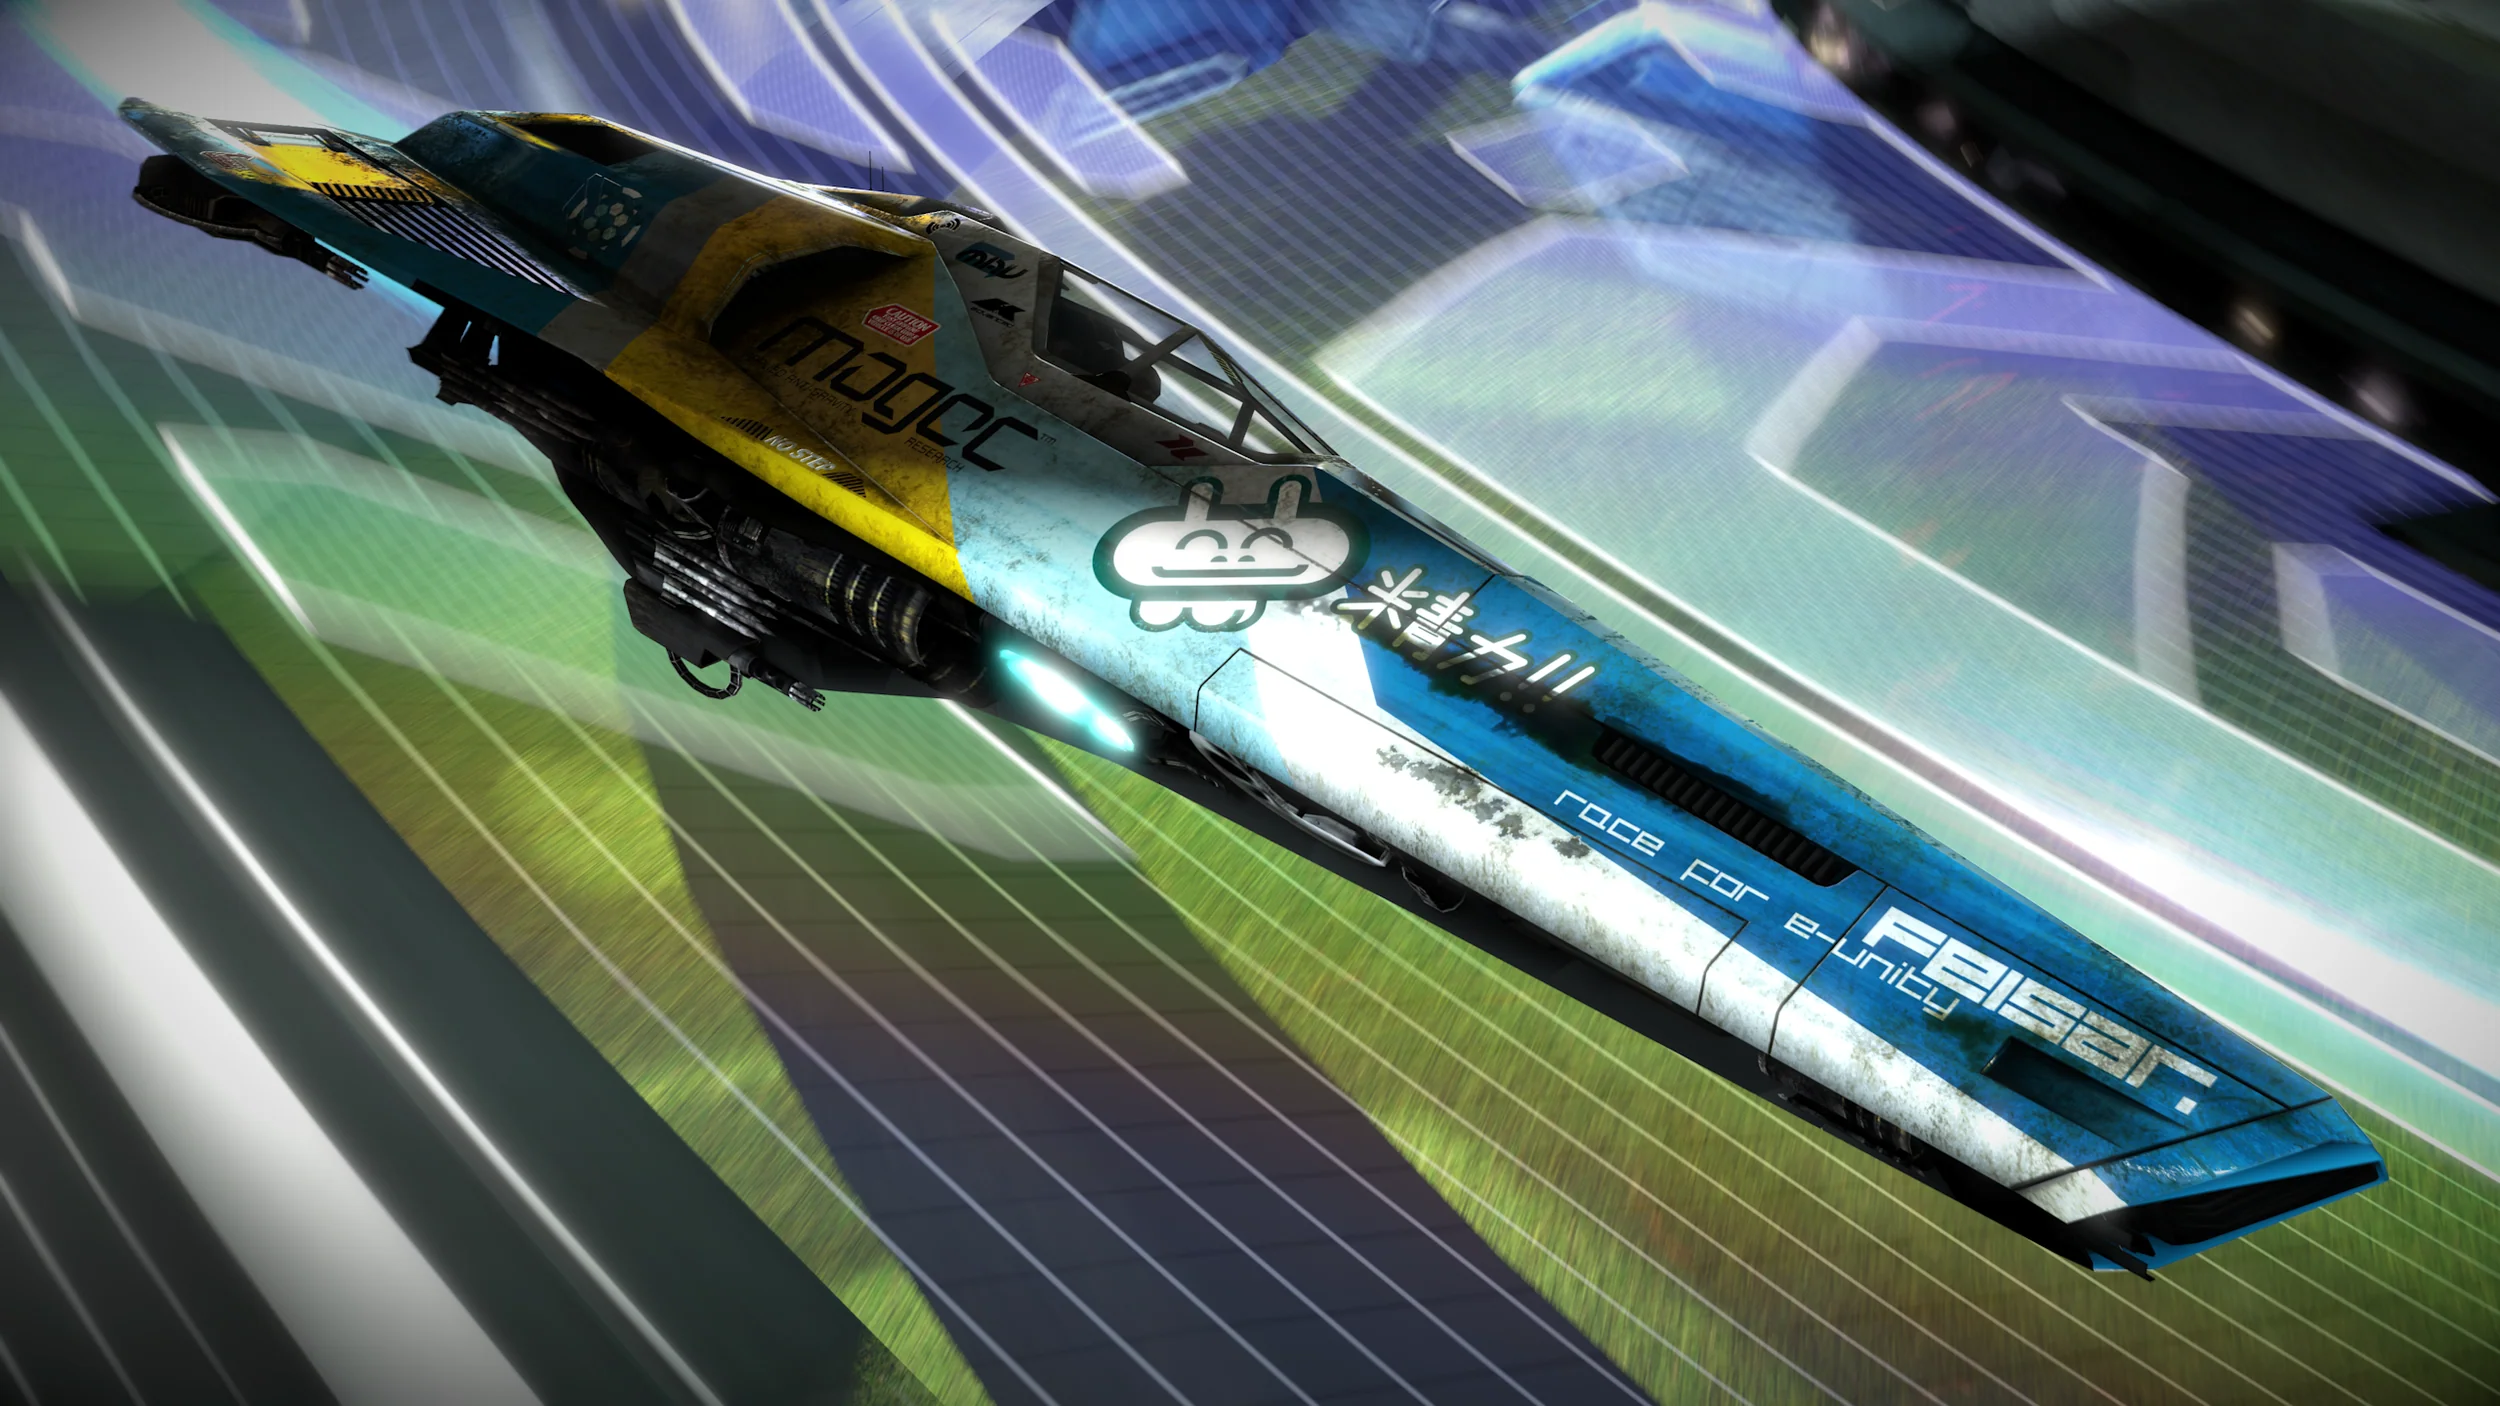 Wipeout Video Games Futuristic Racing 2500x1406